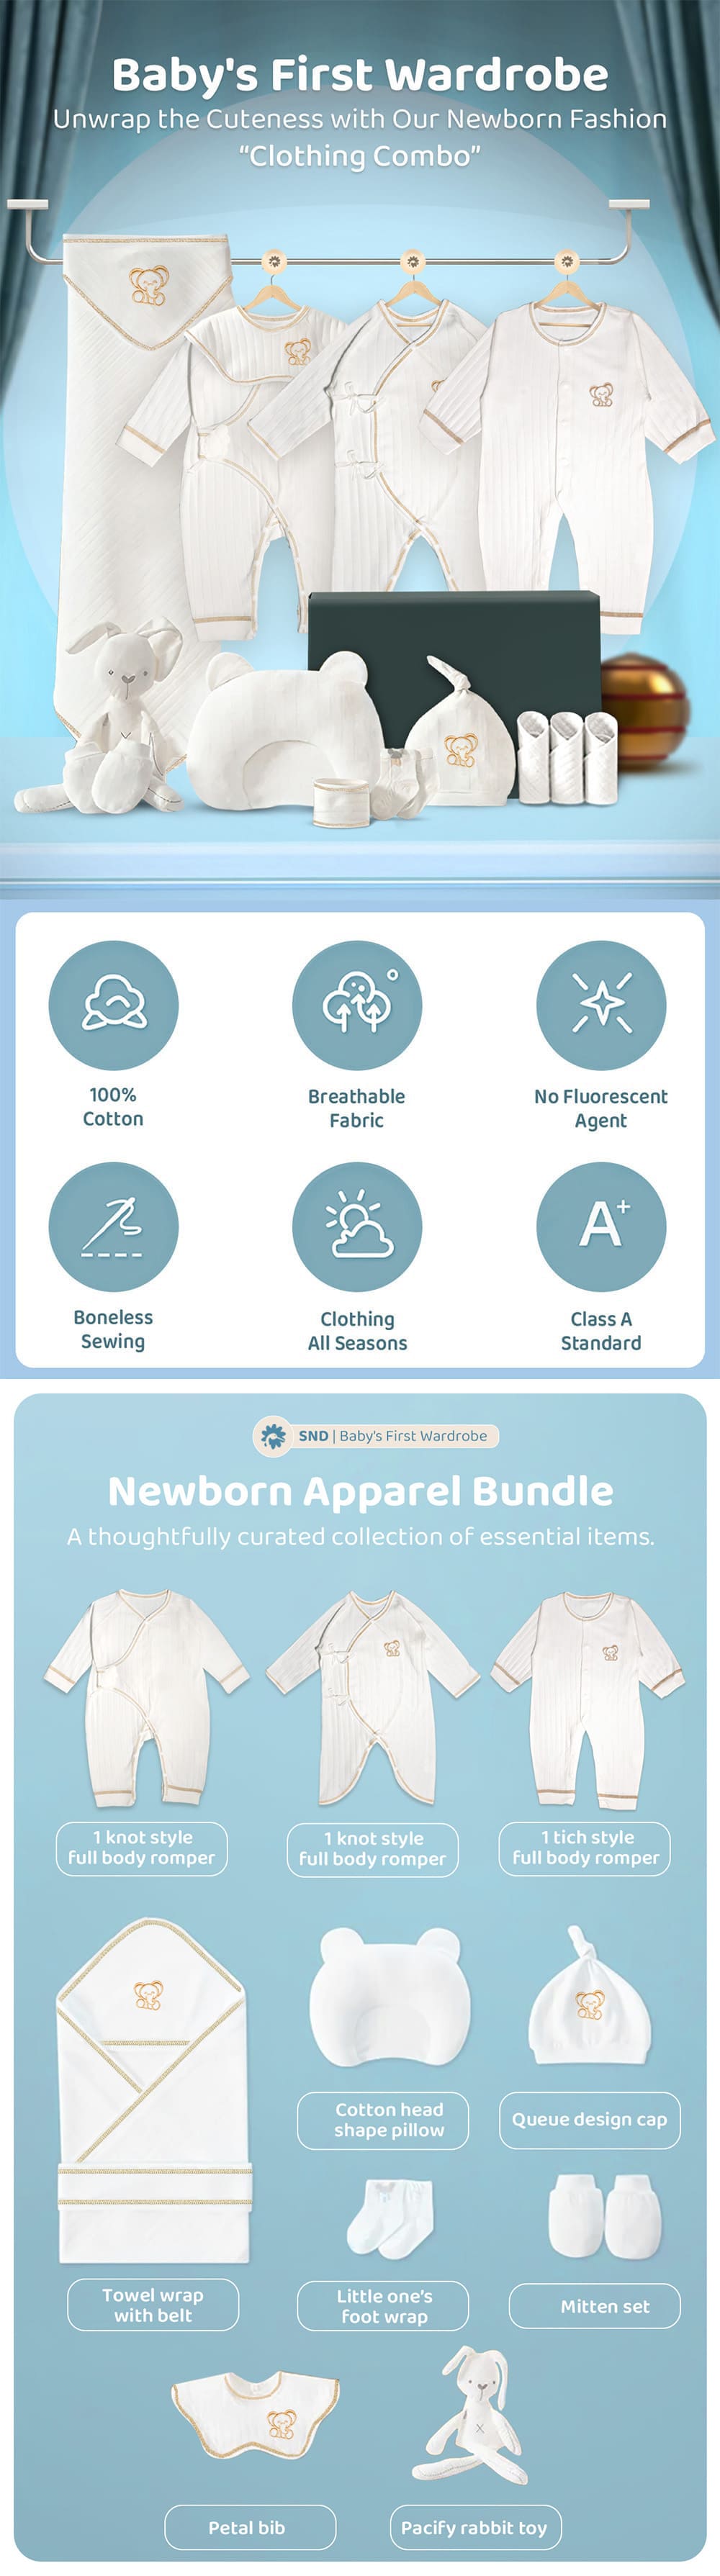 Newborn Baby Clothing Set